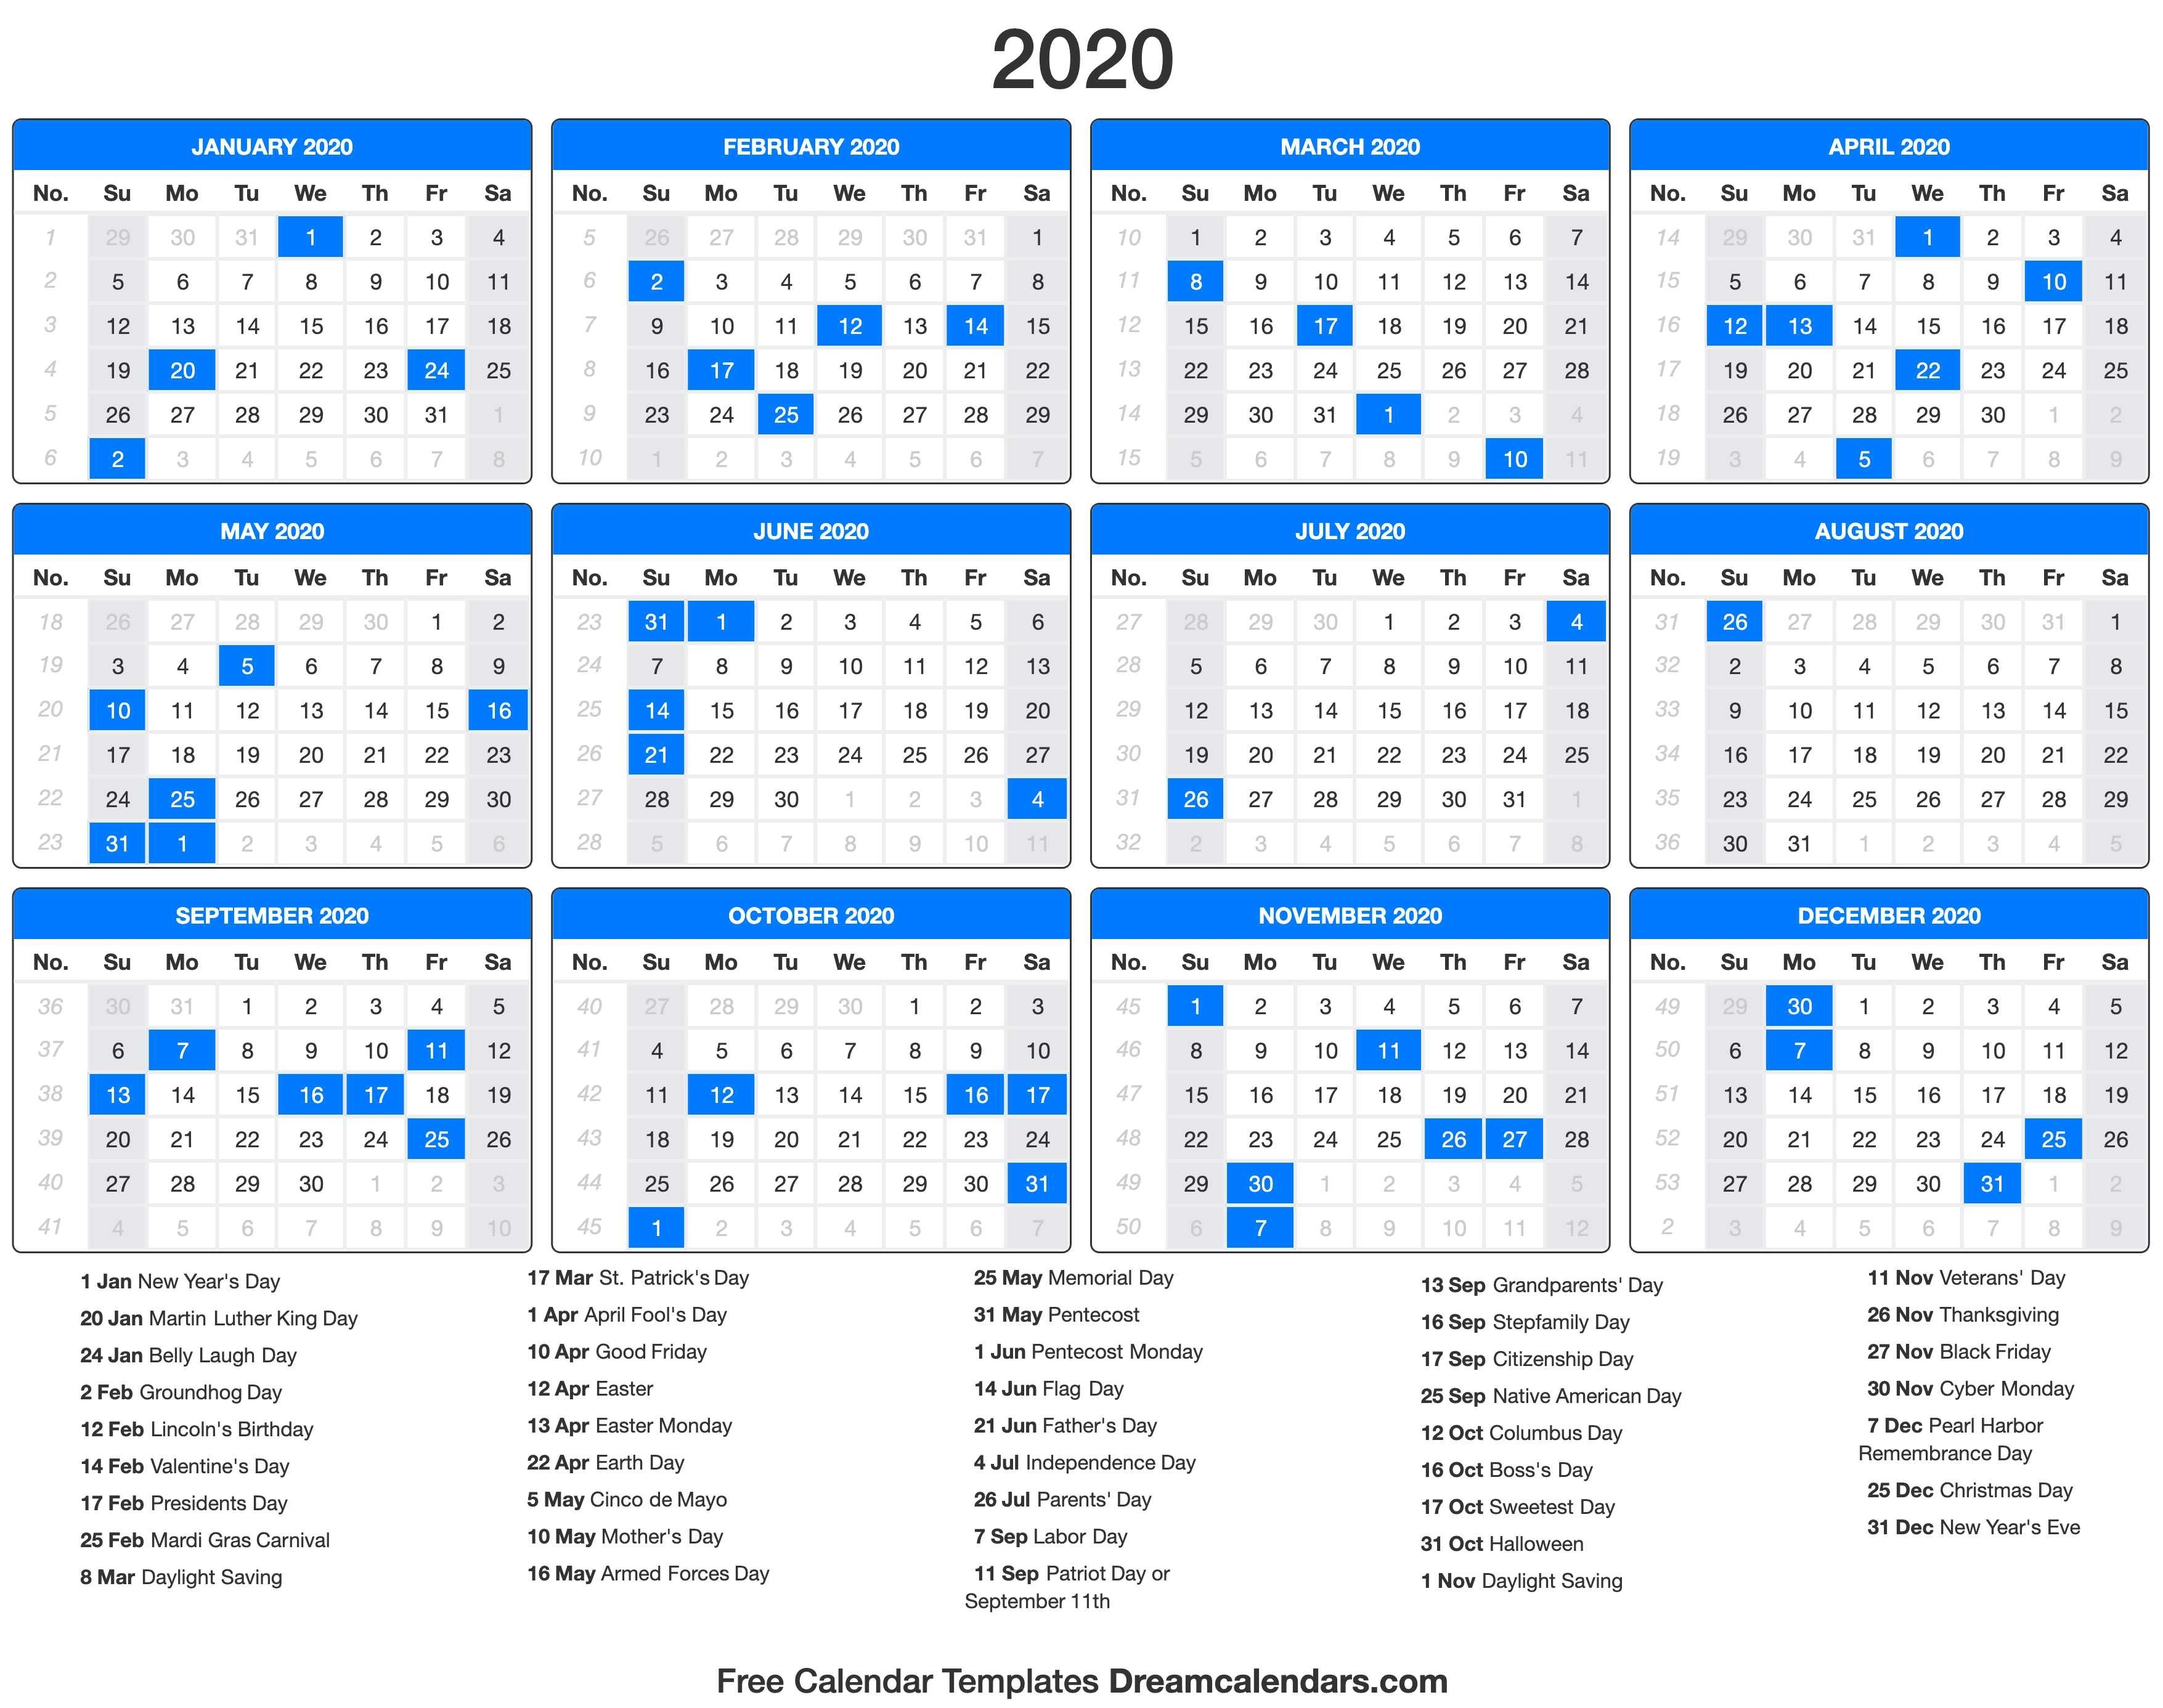 Dream Calendars - Make Your Calendar Template Blog-2020 Printable Calendar With Jewish Holidays